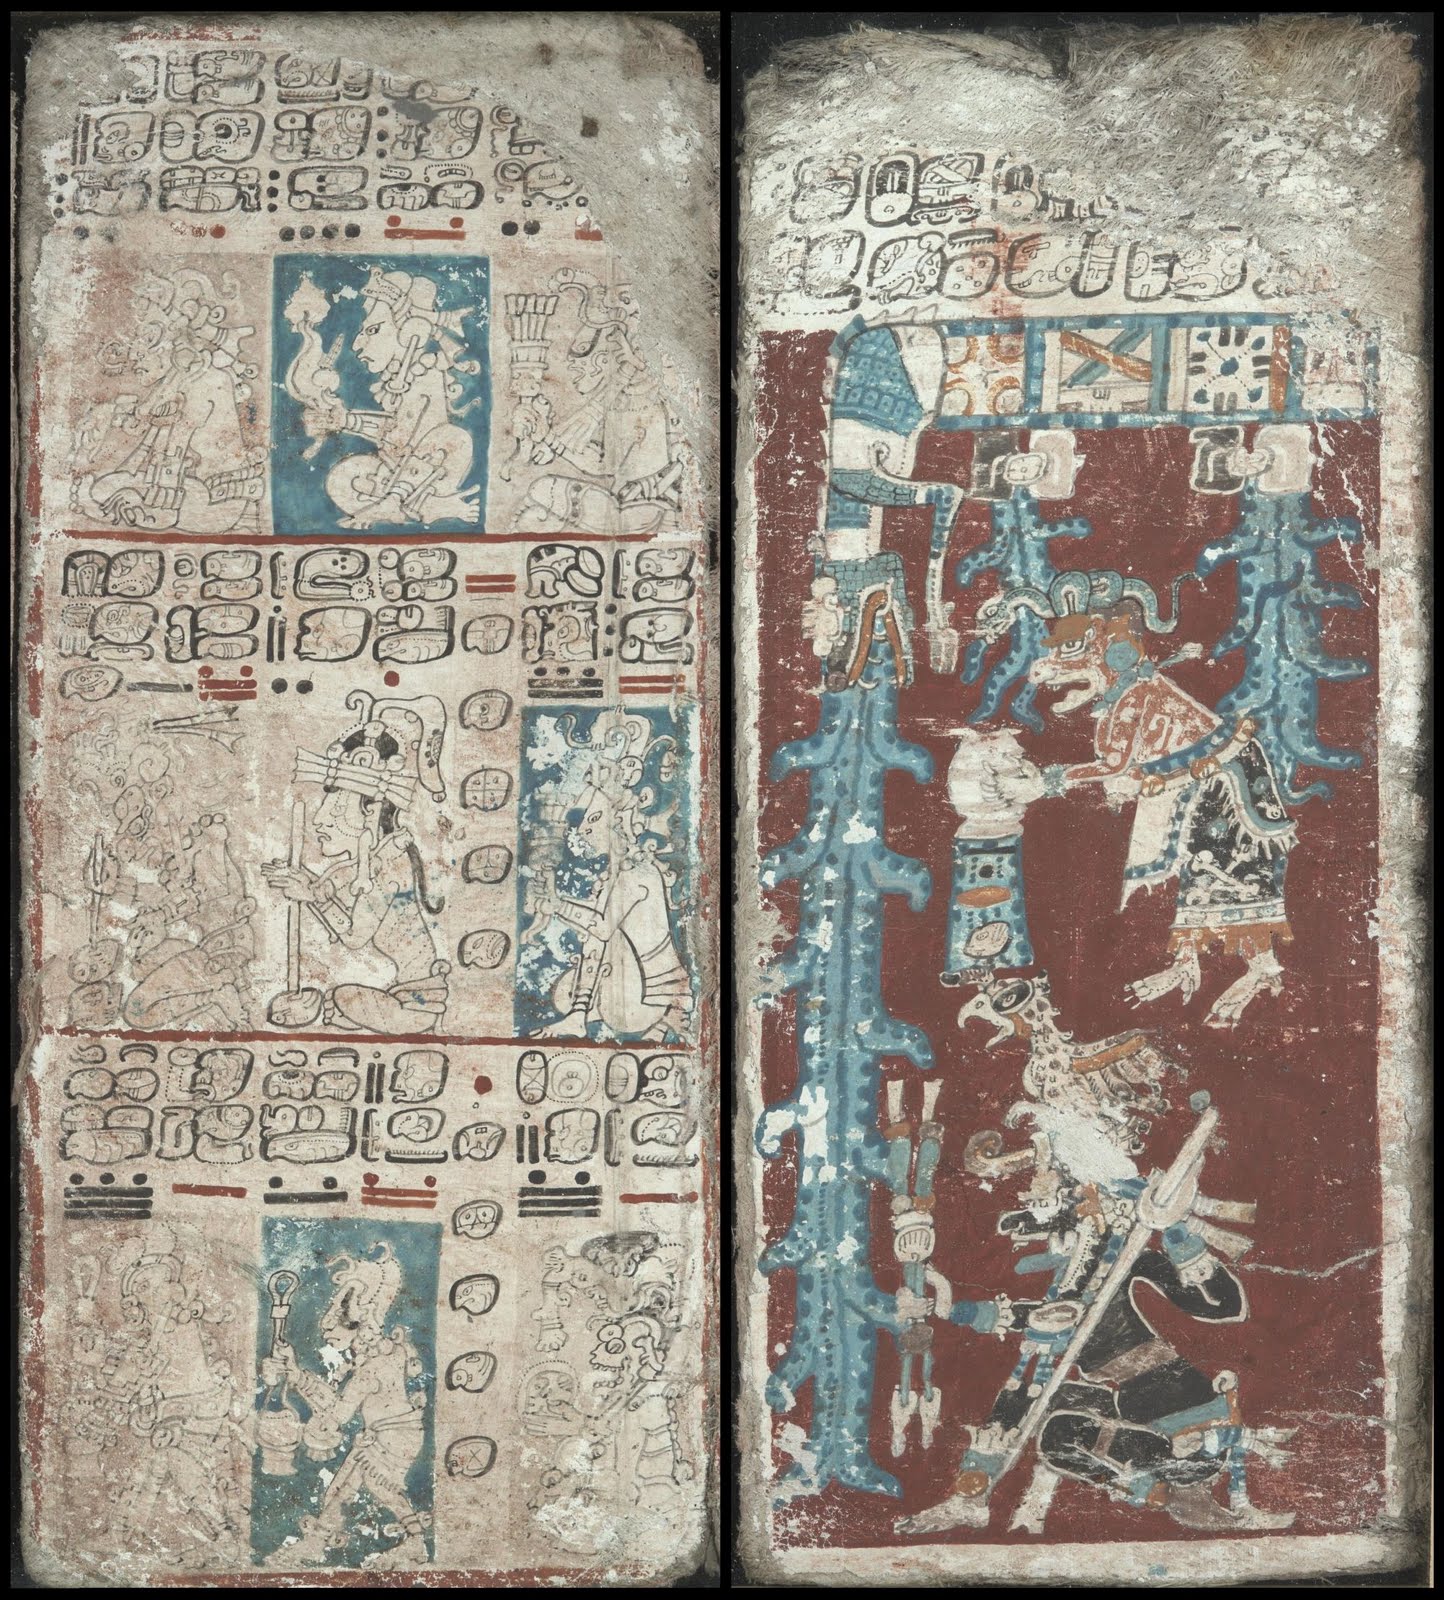 11th century Mayan codex pictographs